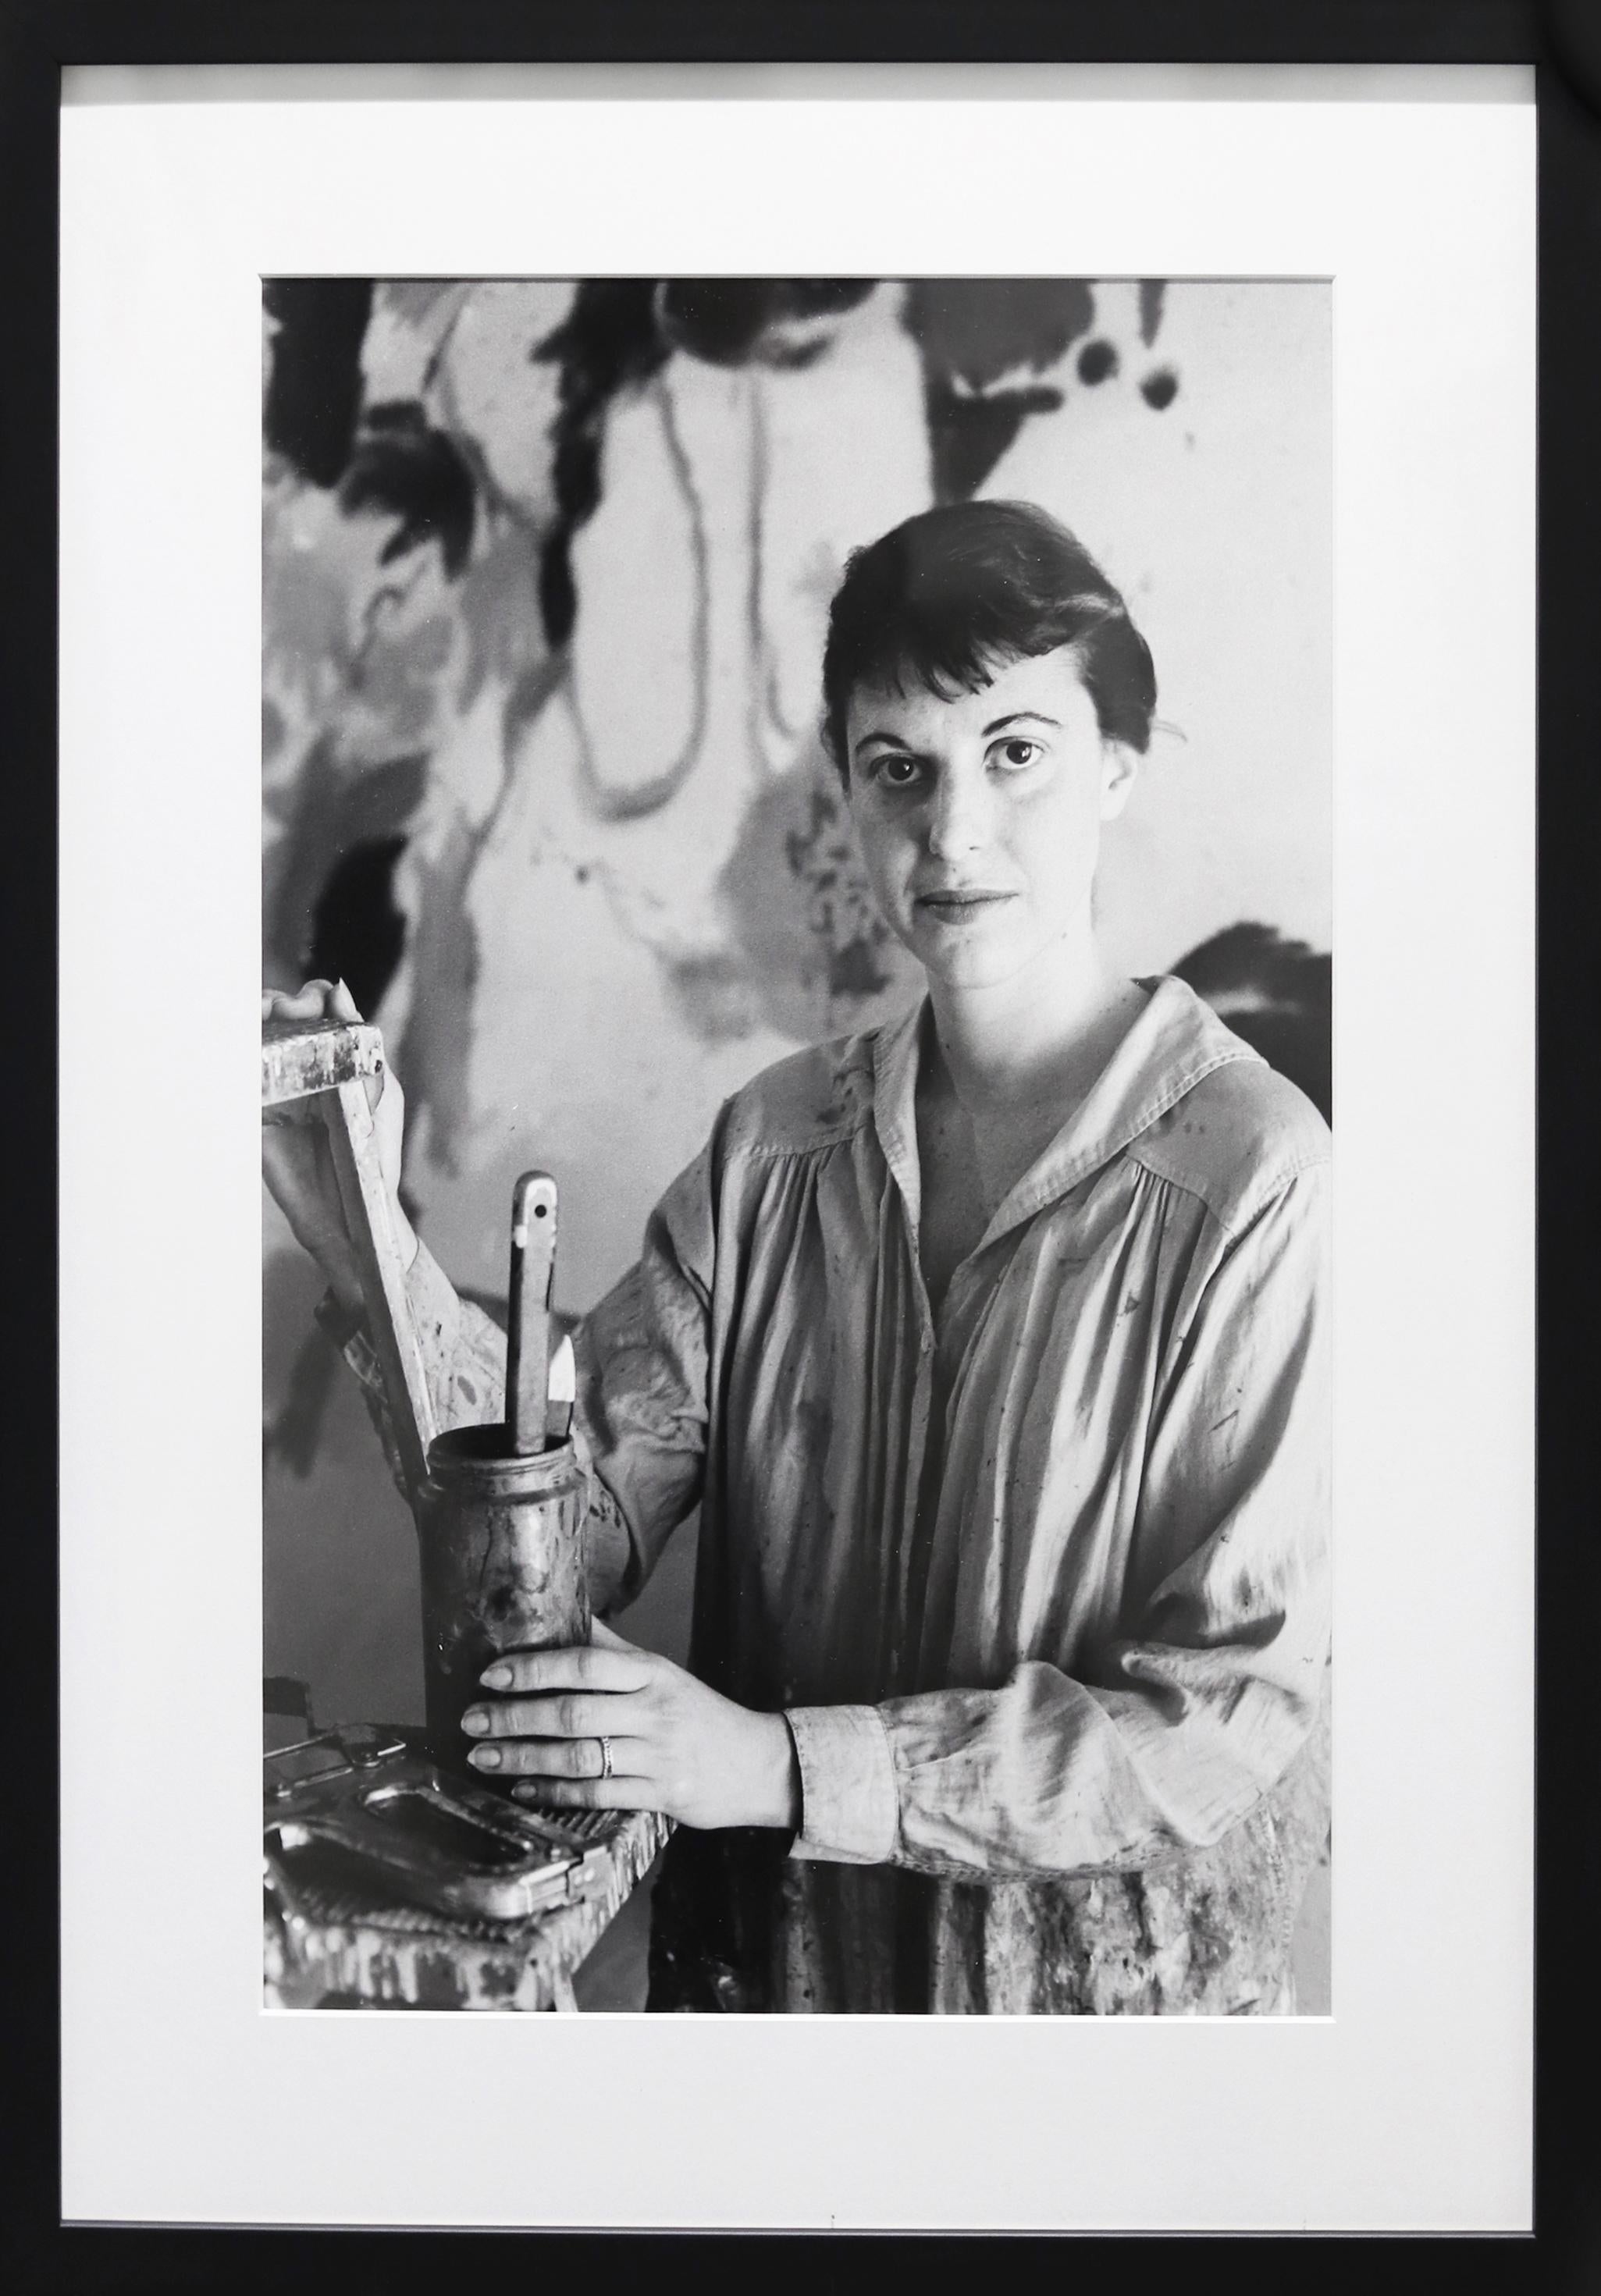 Ben Martin Black and White Photograph - Helen Frankenthaler 1960 Limited Edition Archival Pigment Print, Framed